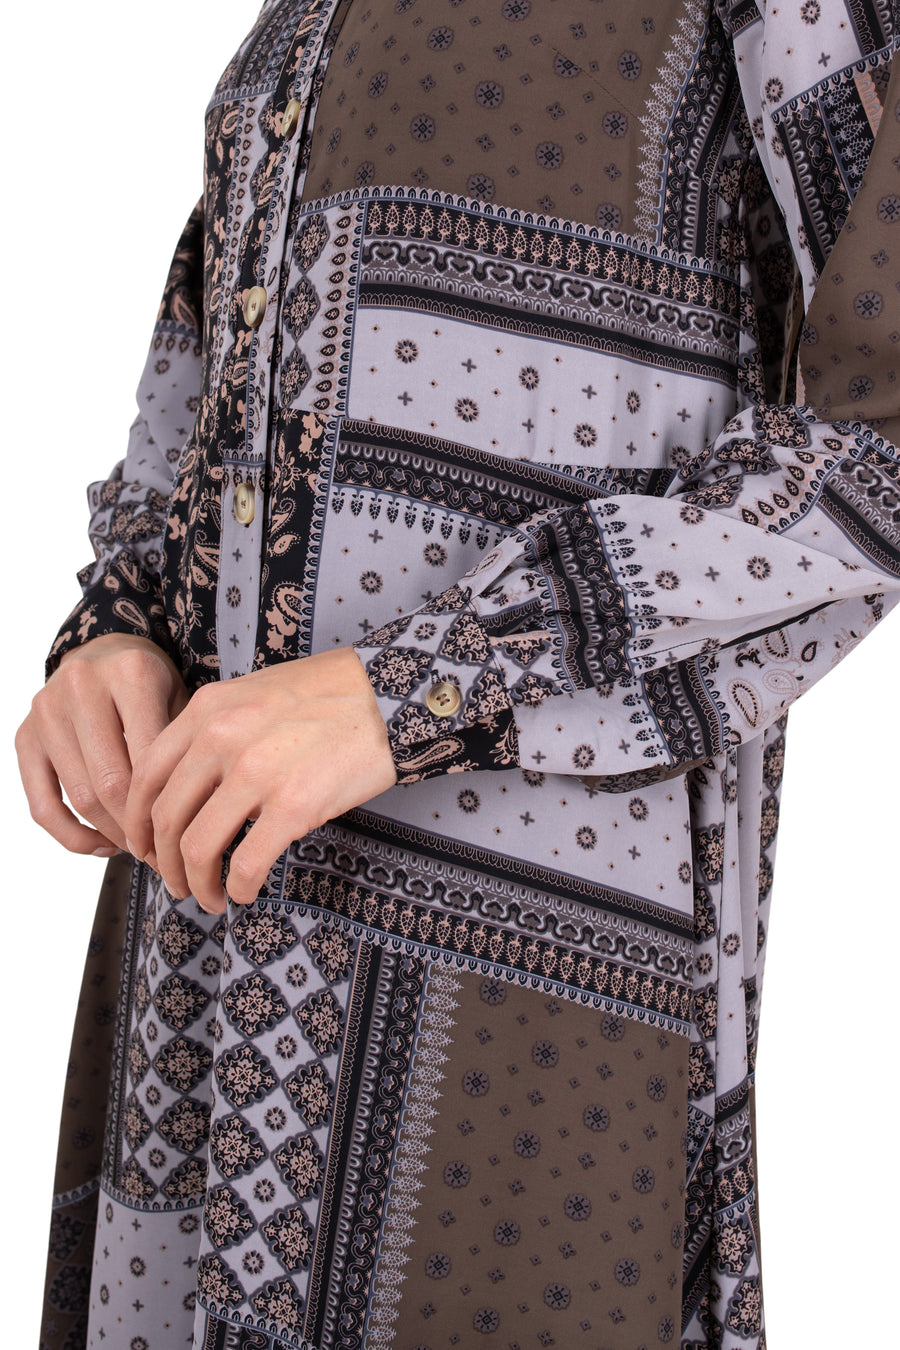 MAXI ALINA DRESS (Grey/Black/Pattern) 49"